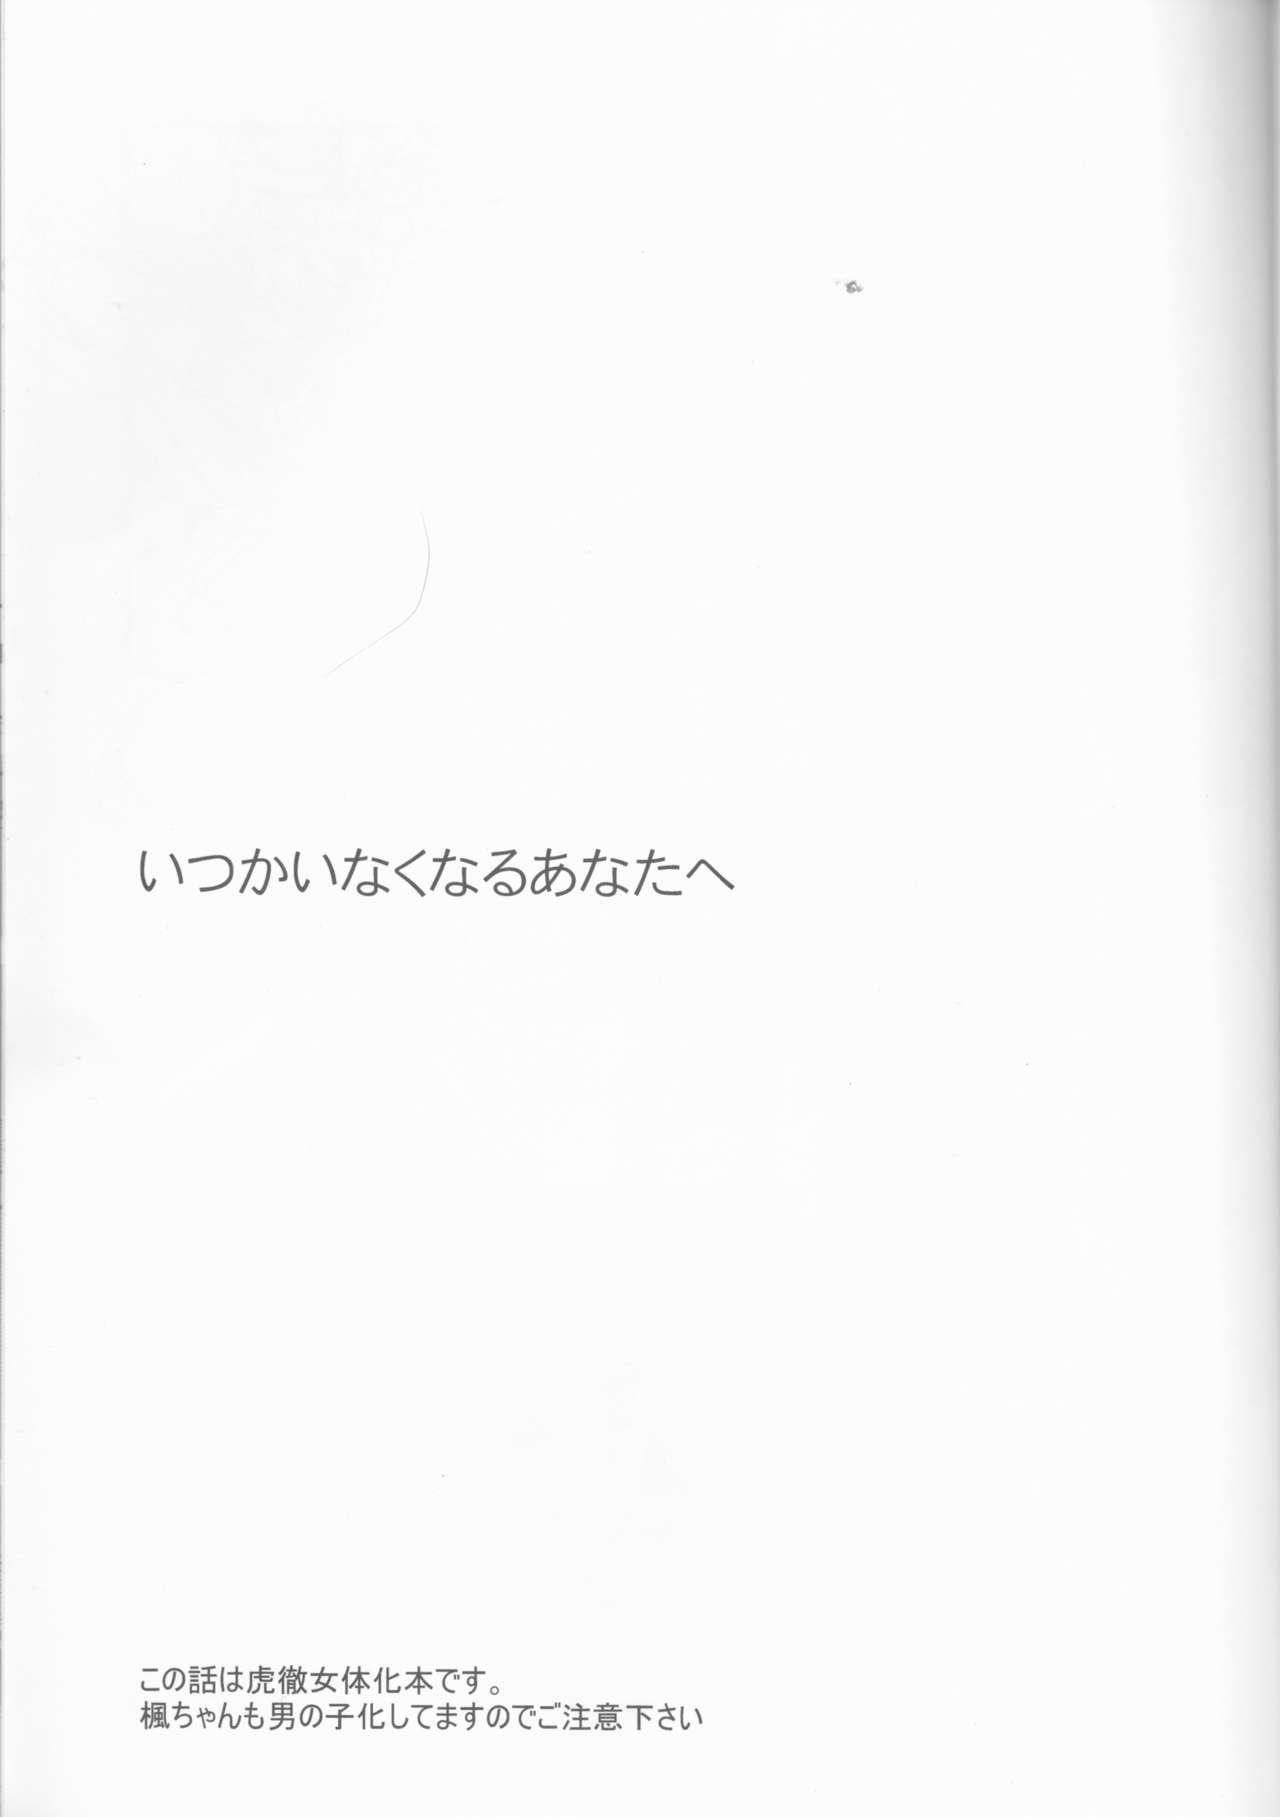 Adult Itsuka wa inaku naru kimi e - Tiger and bunny Bottom - Page 2